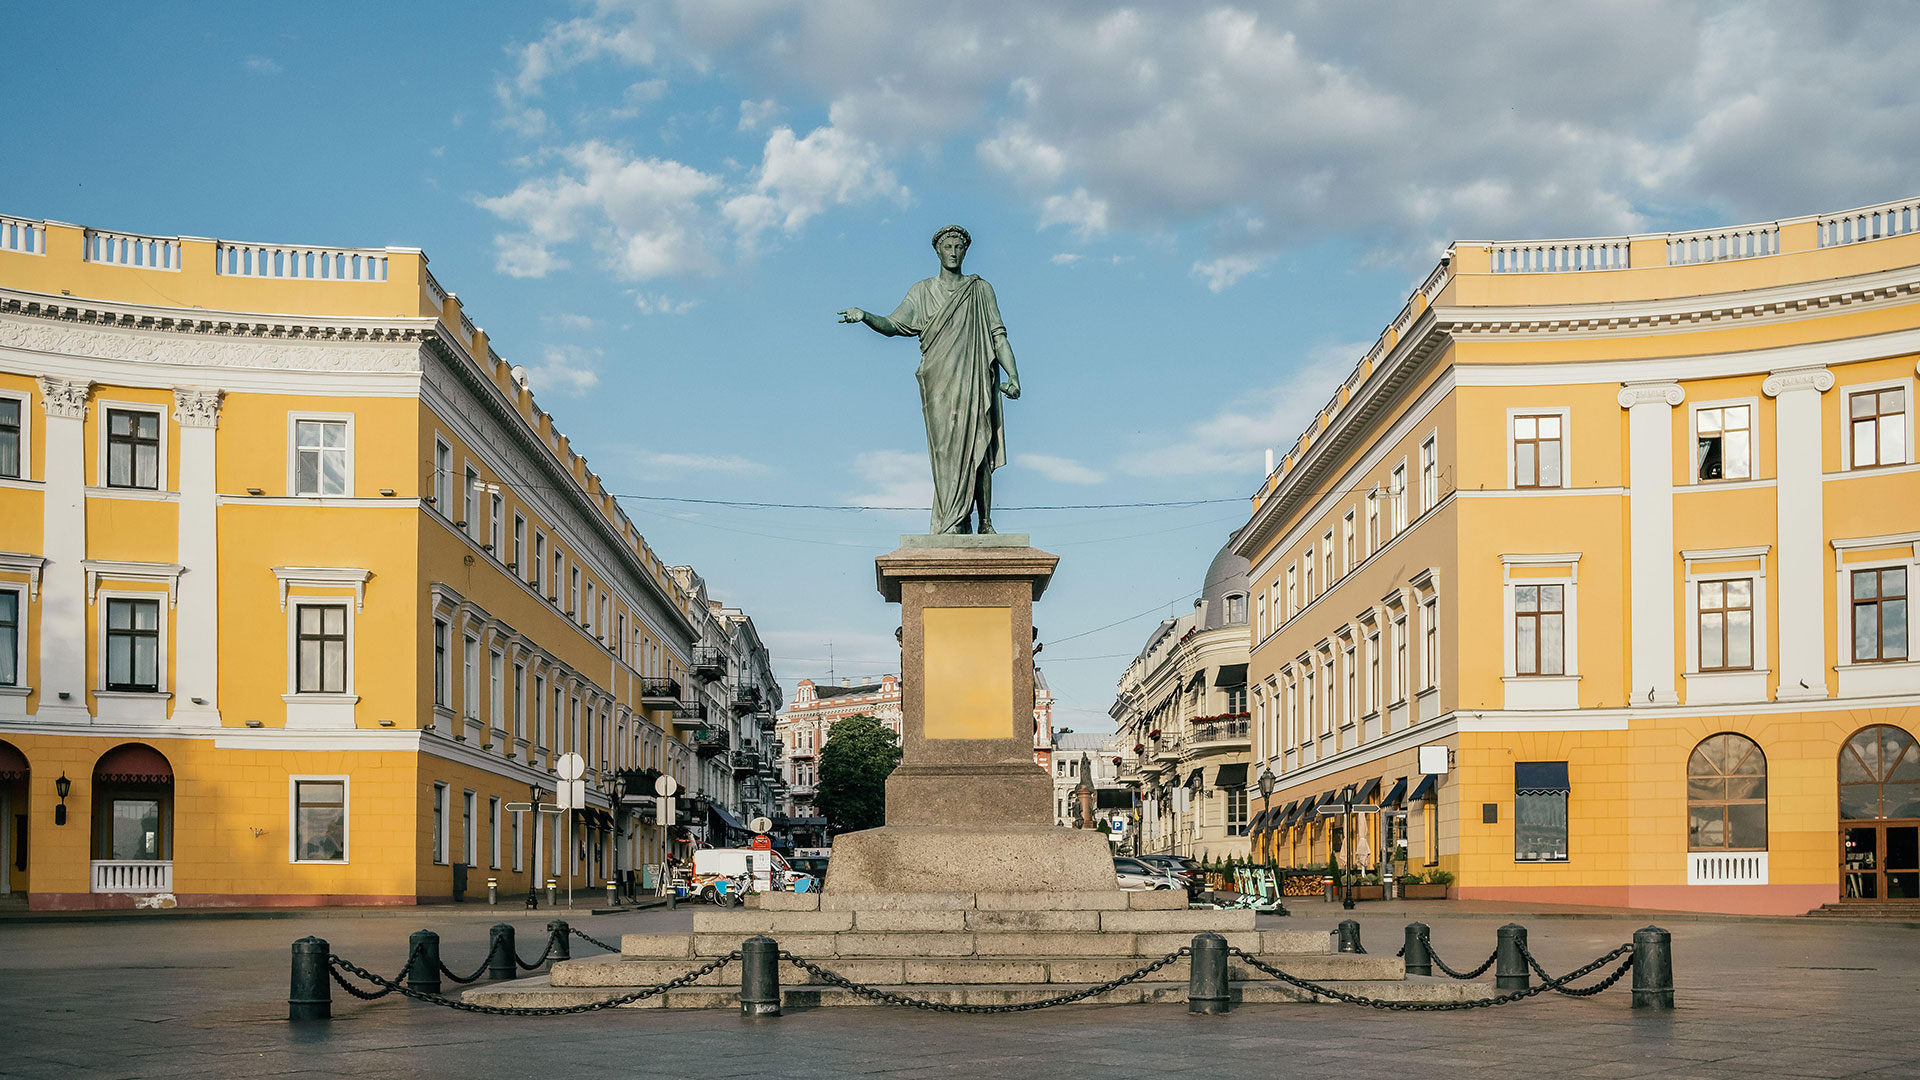 Monument to Duke de Richelieu in Odessa, Ukraine
Grosby